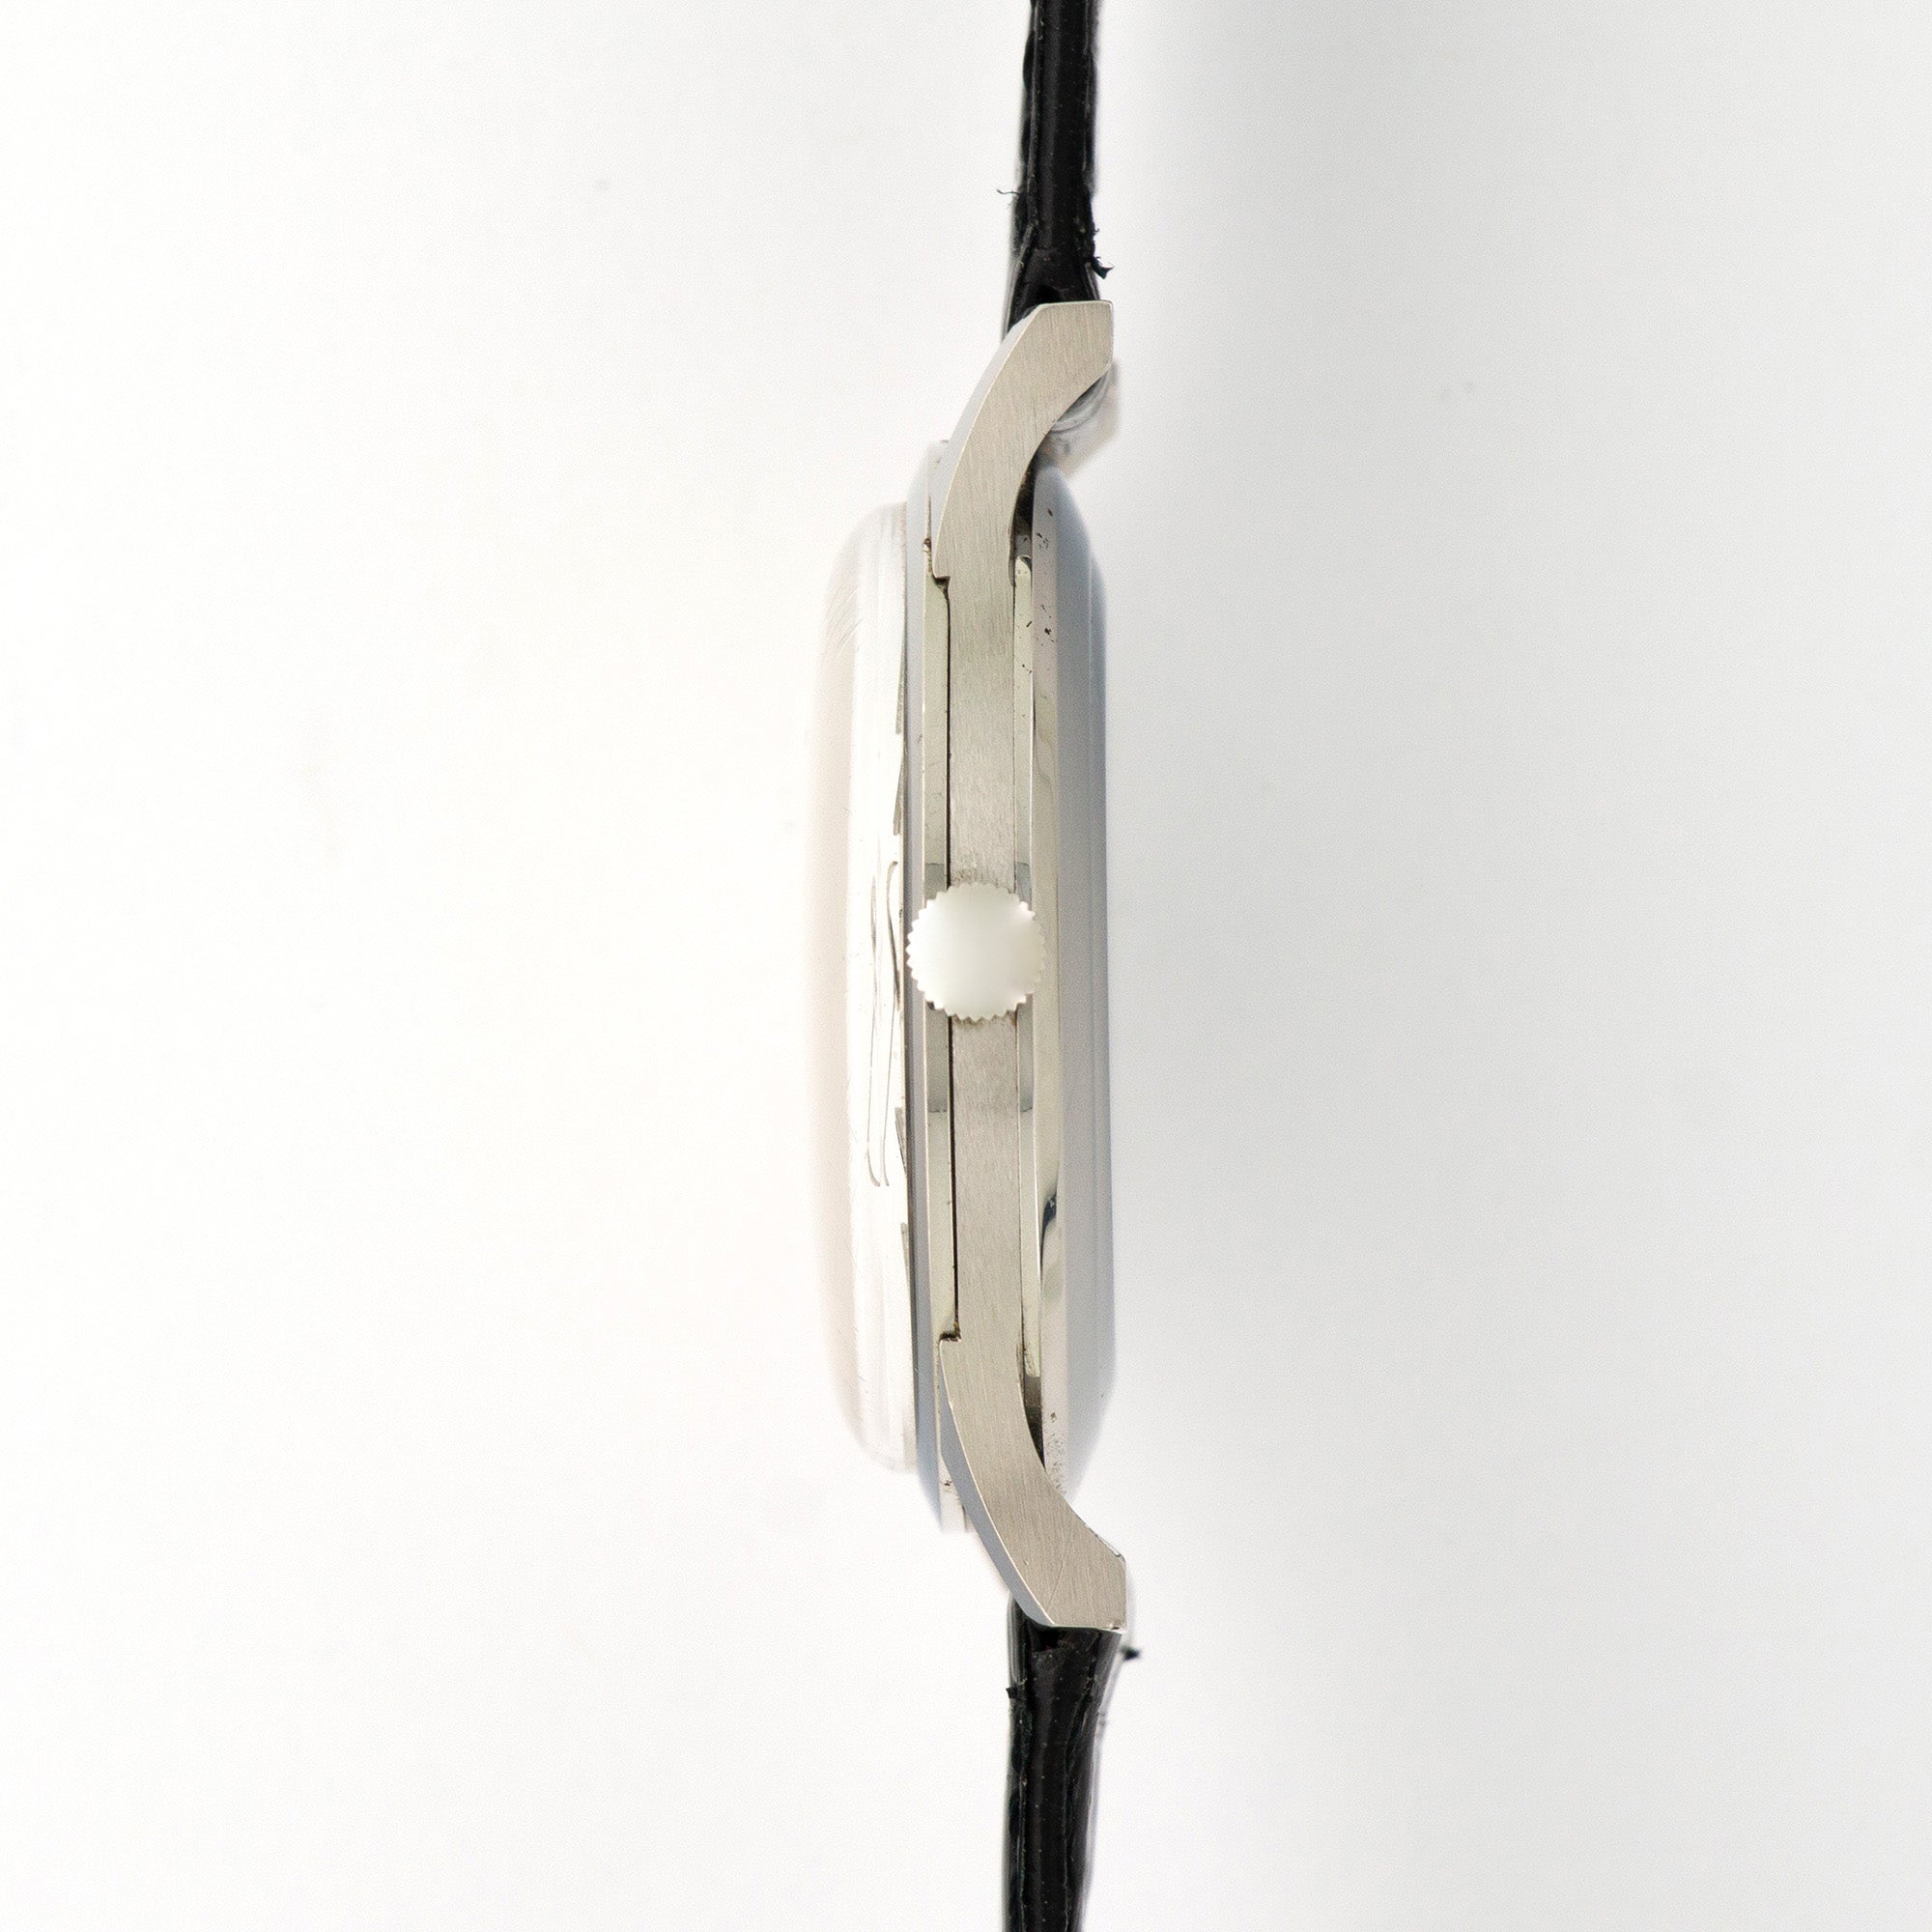 IWC - IWC Steel Automatic Strap Watch - The Keystone Watches